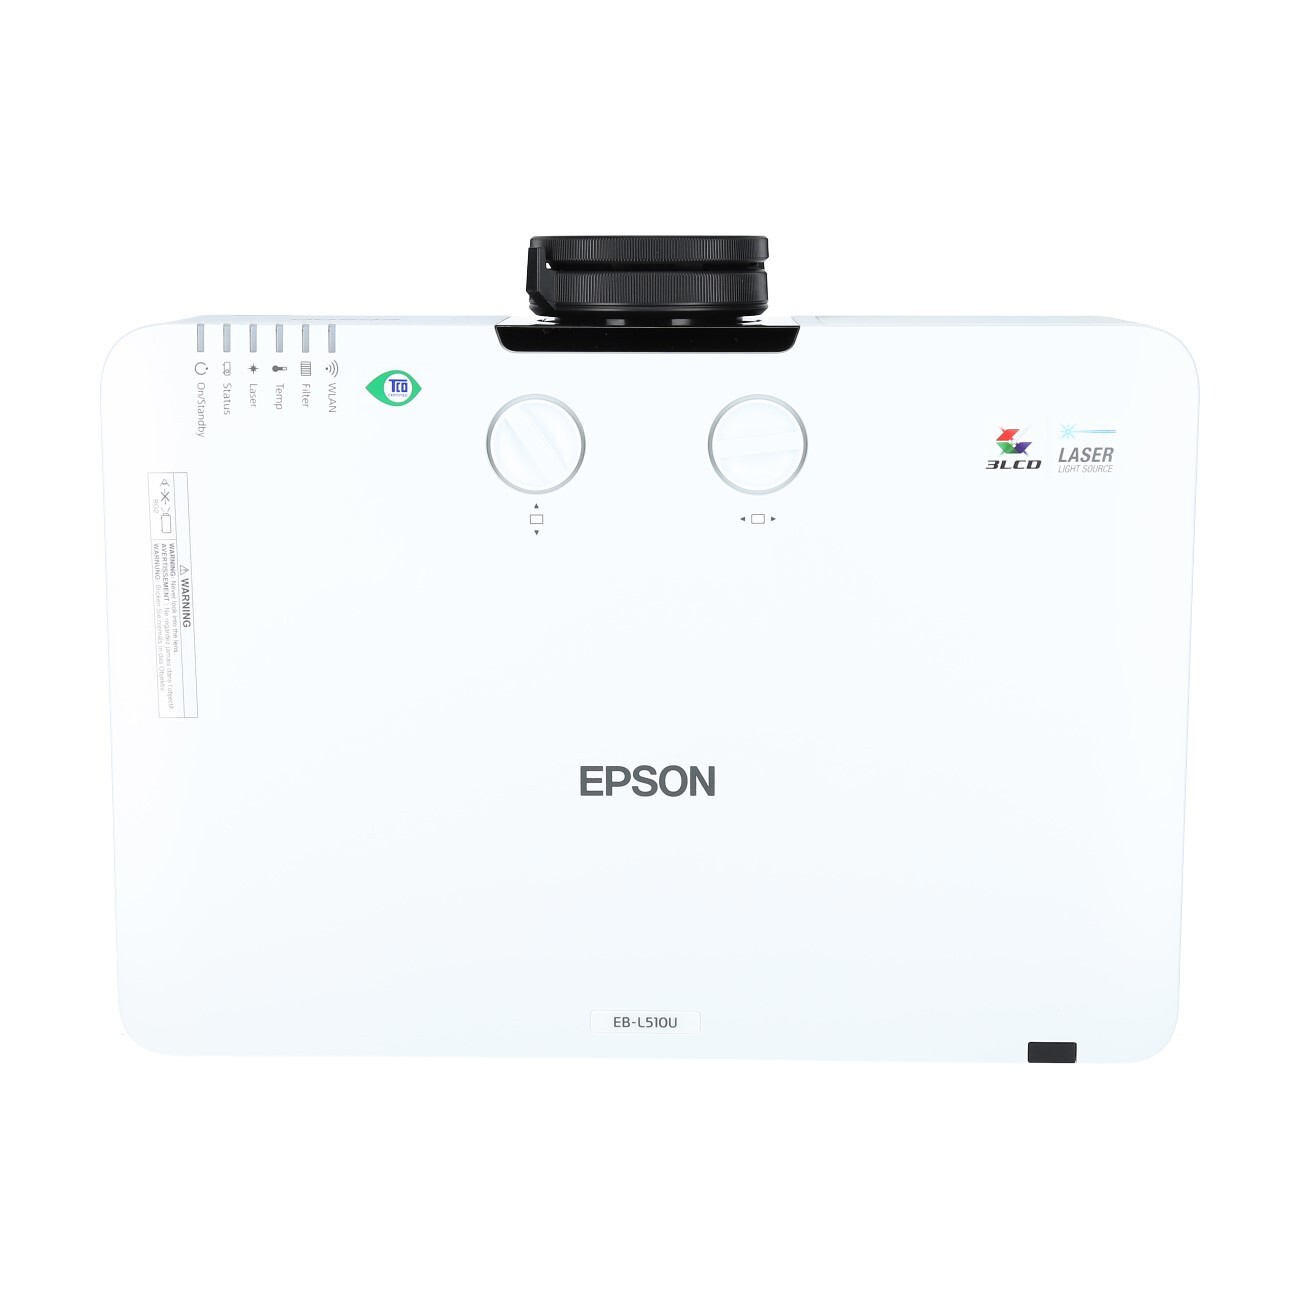 Epson-EB-L510U